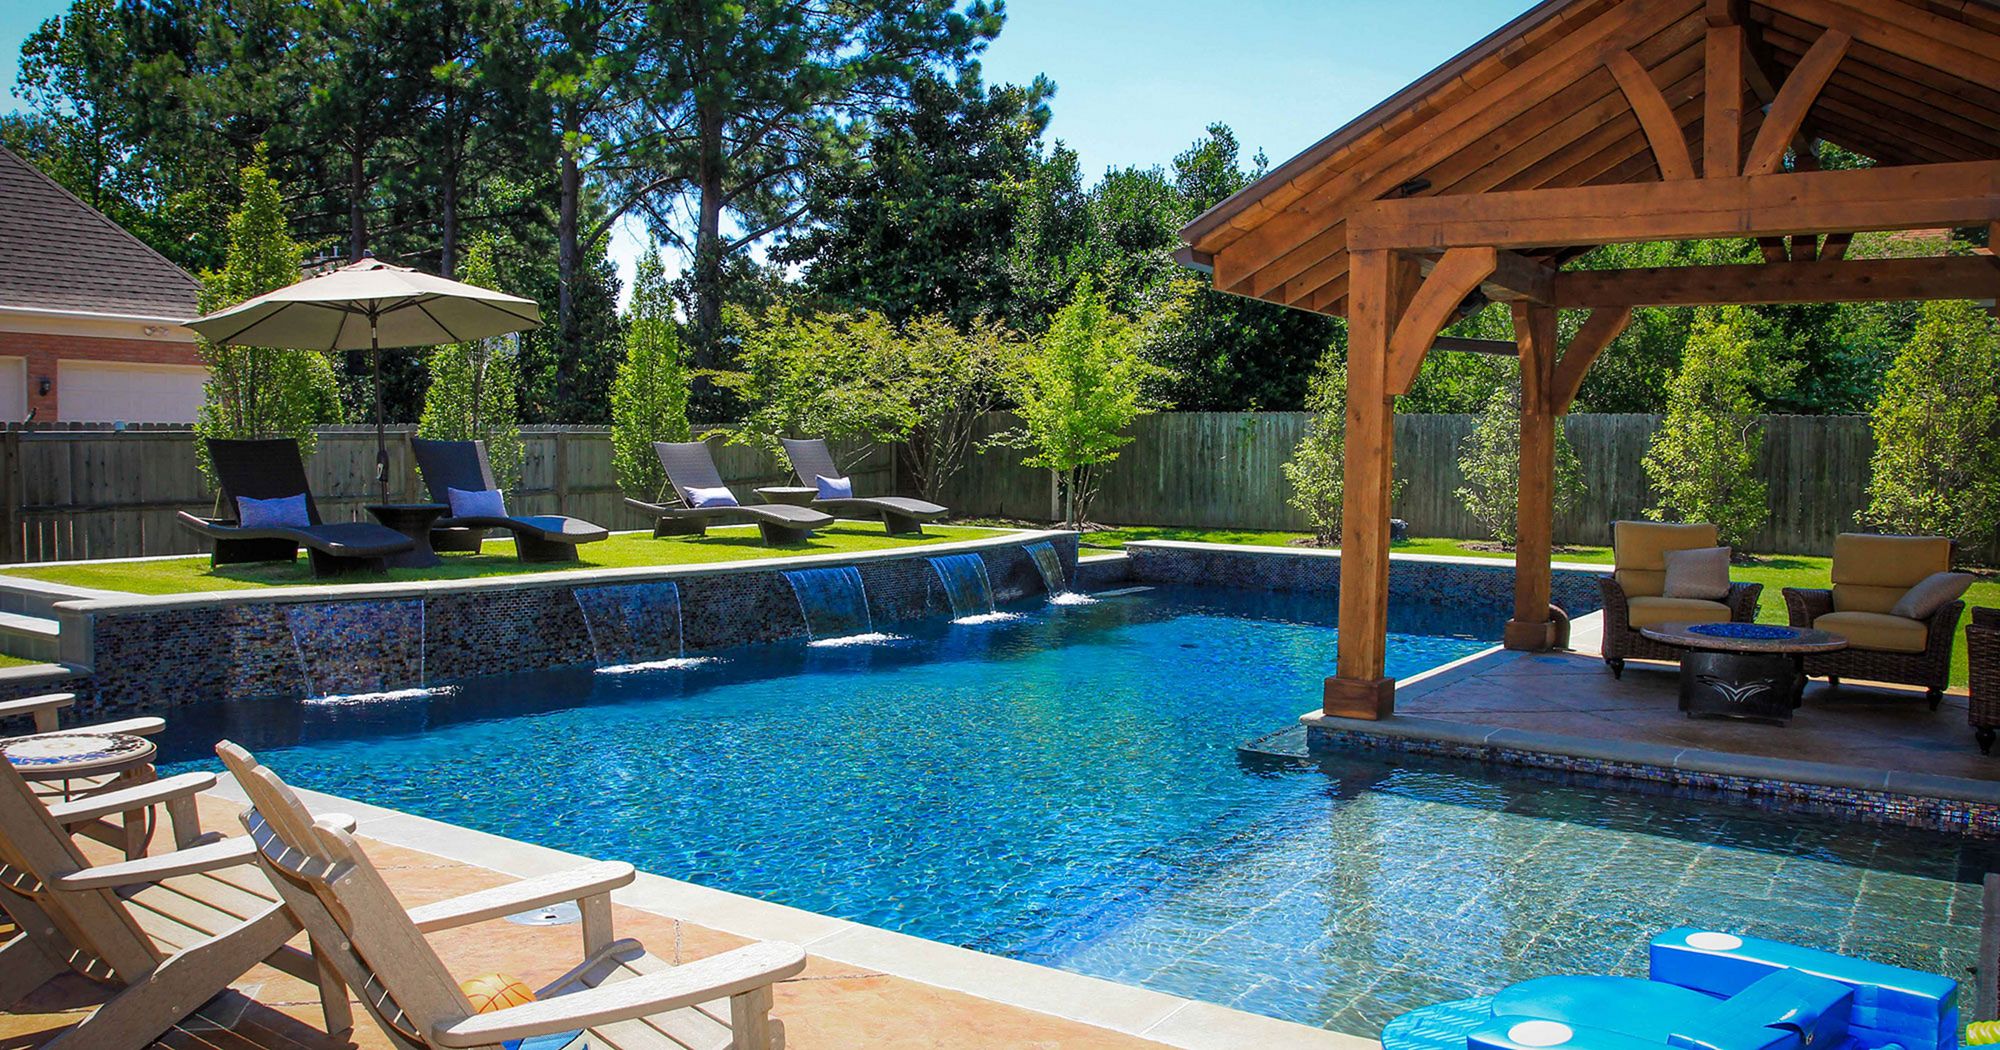 Chic Backyard Swimming Pool Design